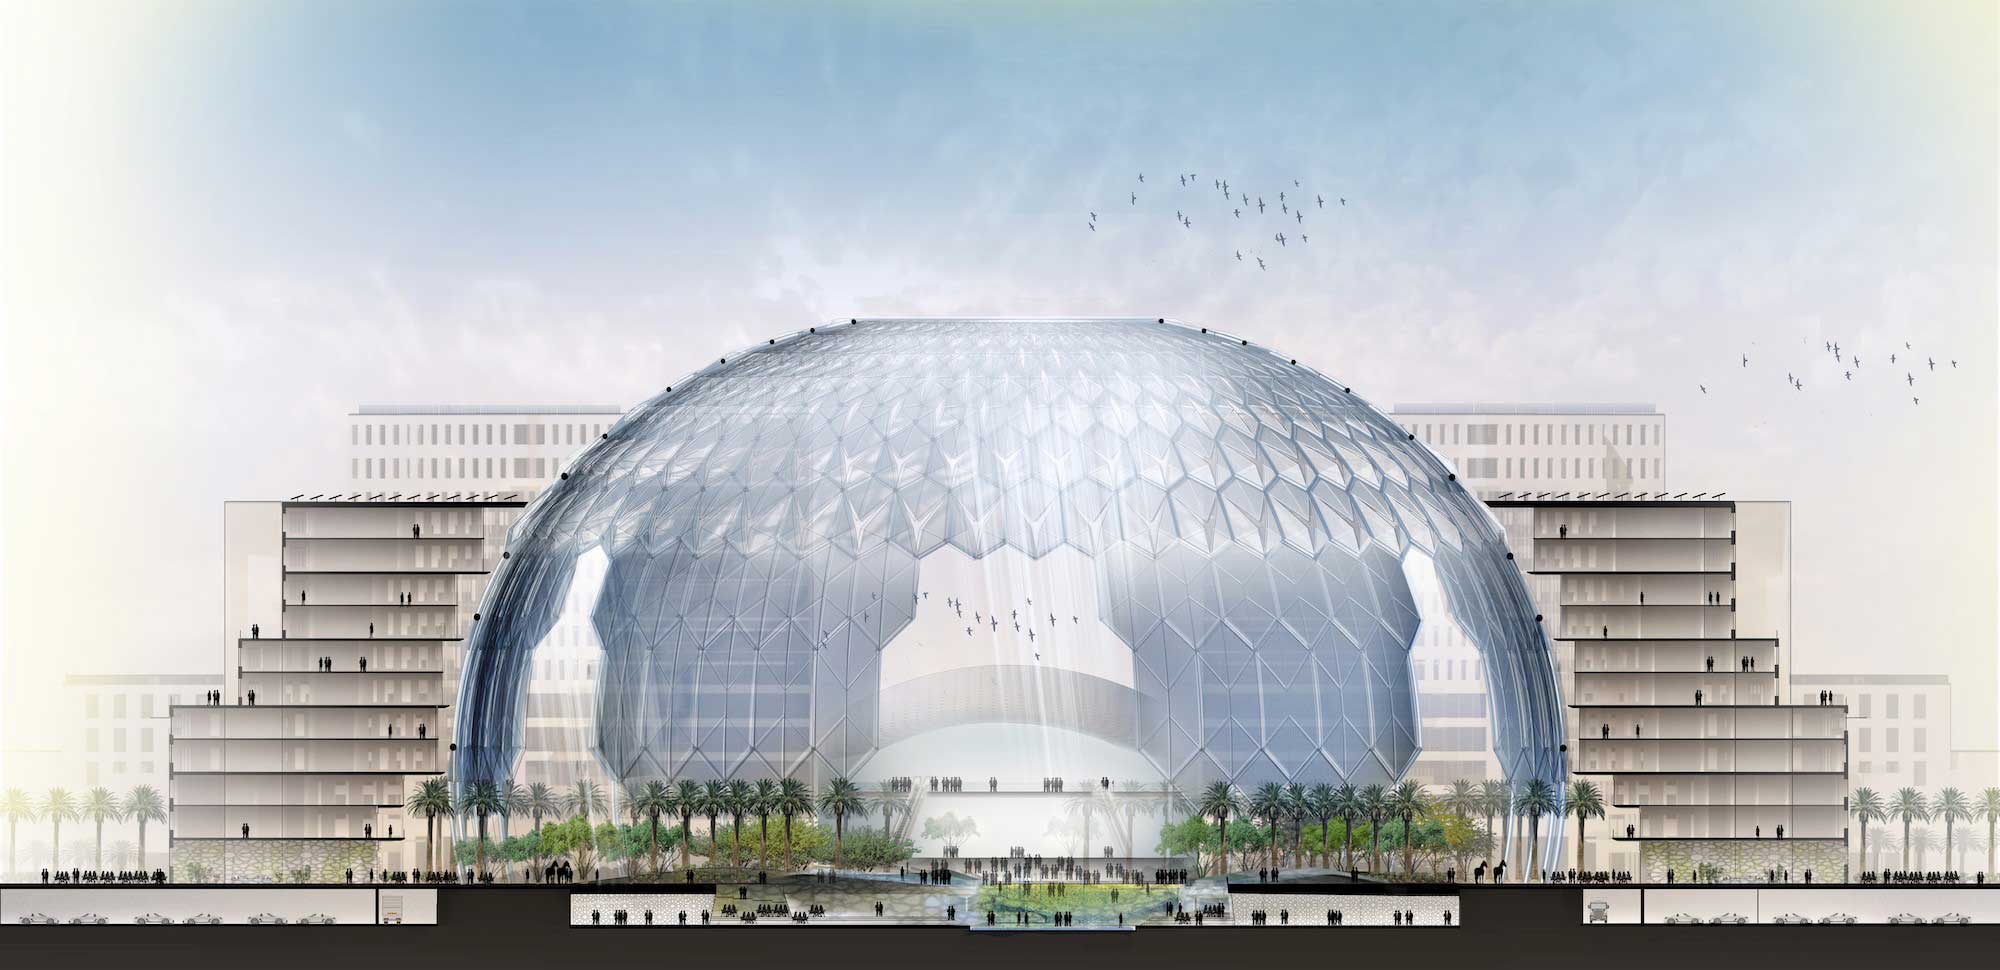 Expo 2020 Dubai Awards Major Contract For Iconic Al Wasl Plaza